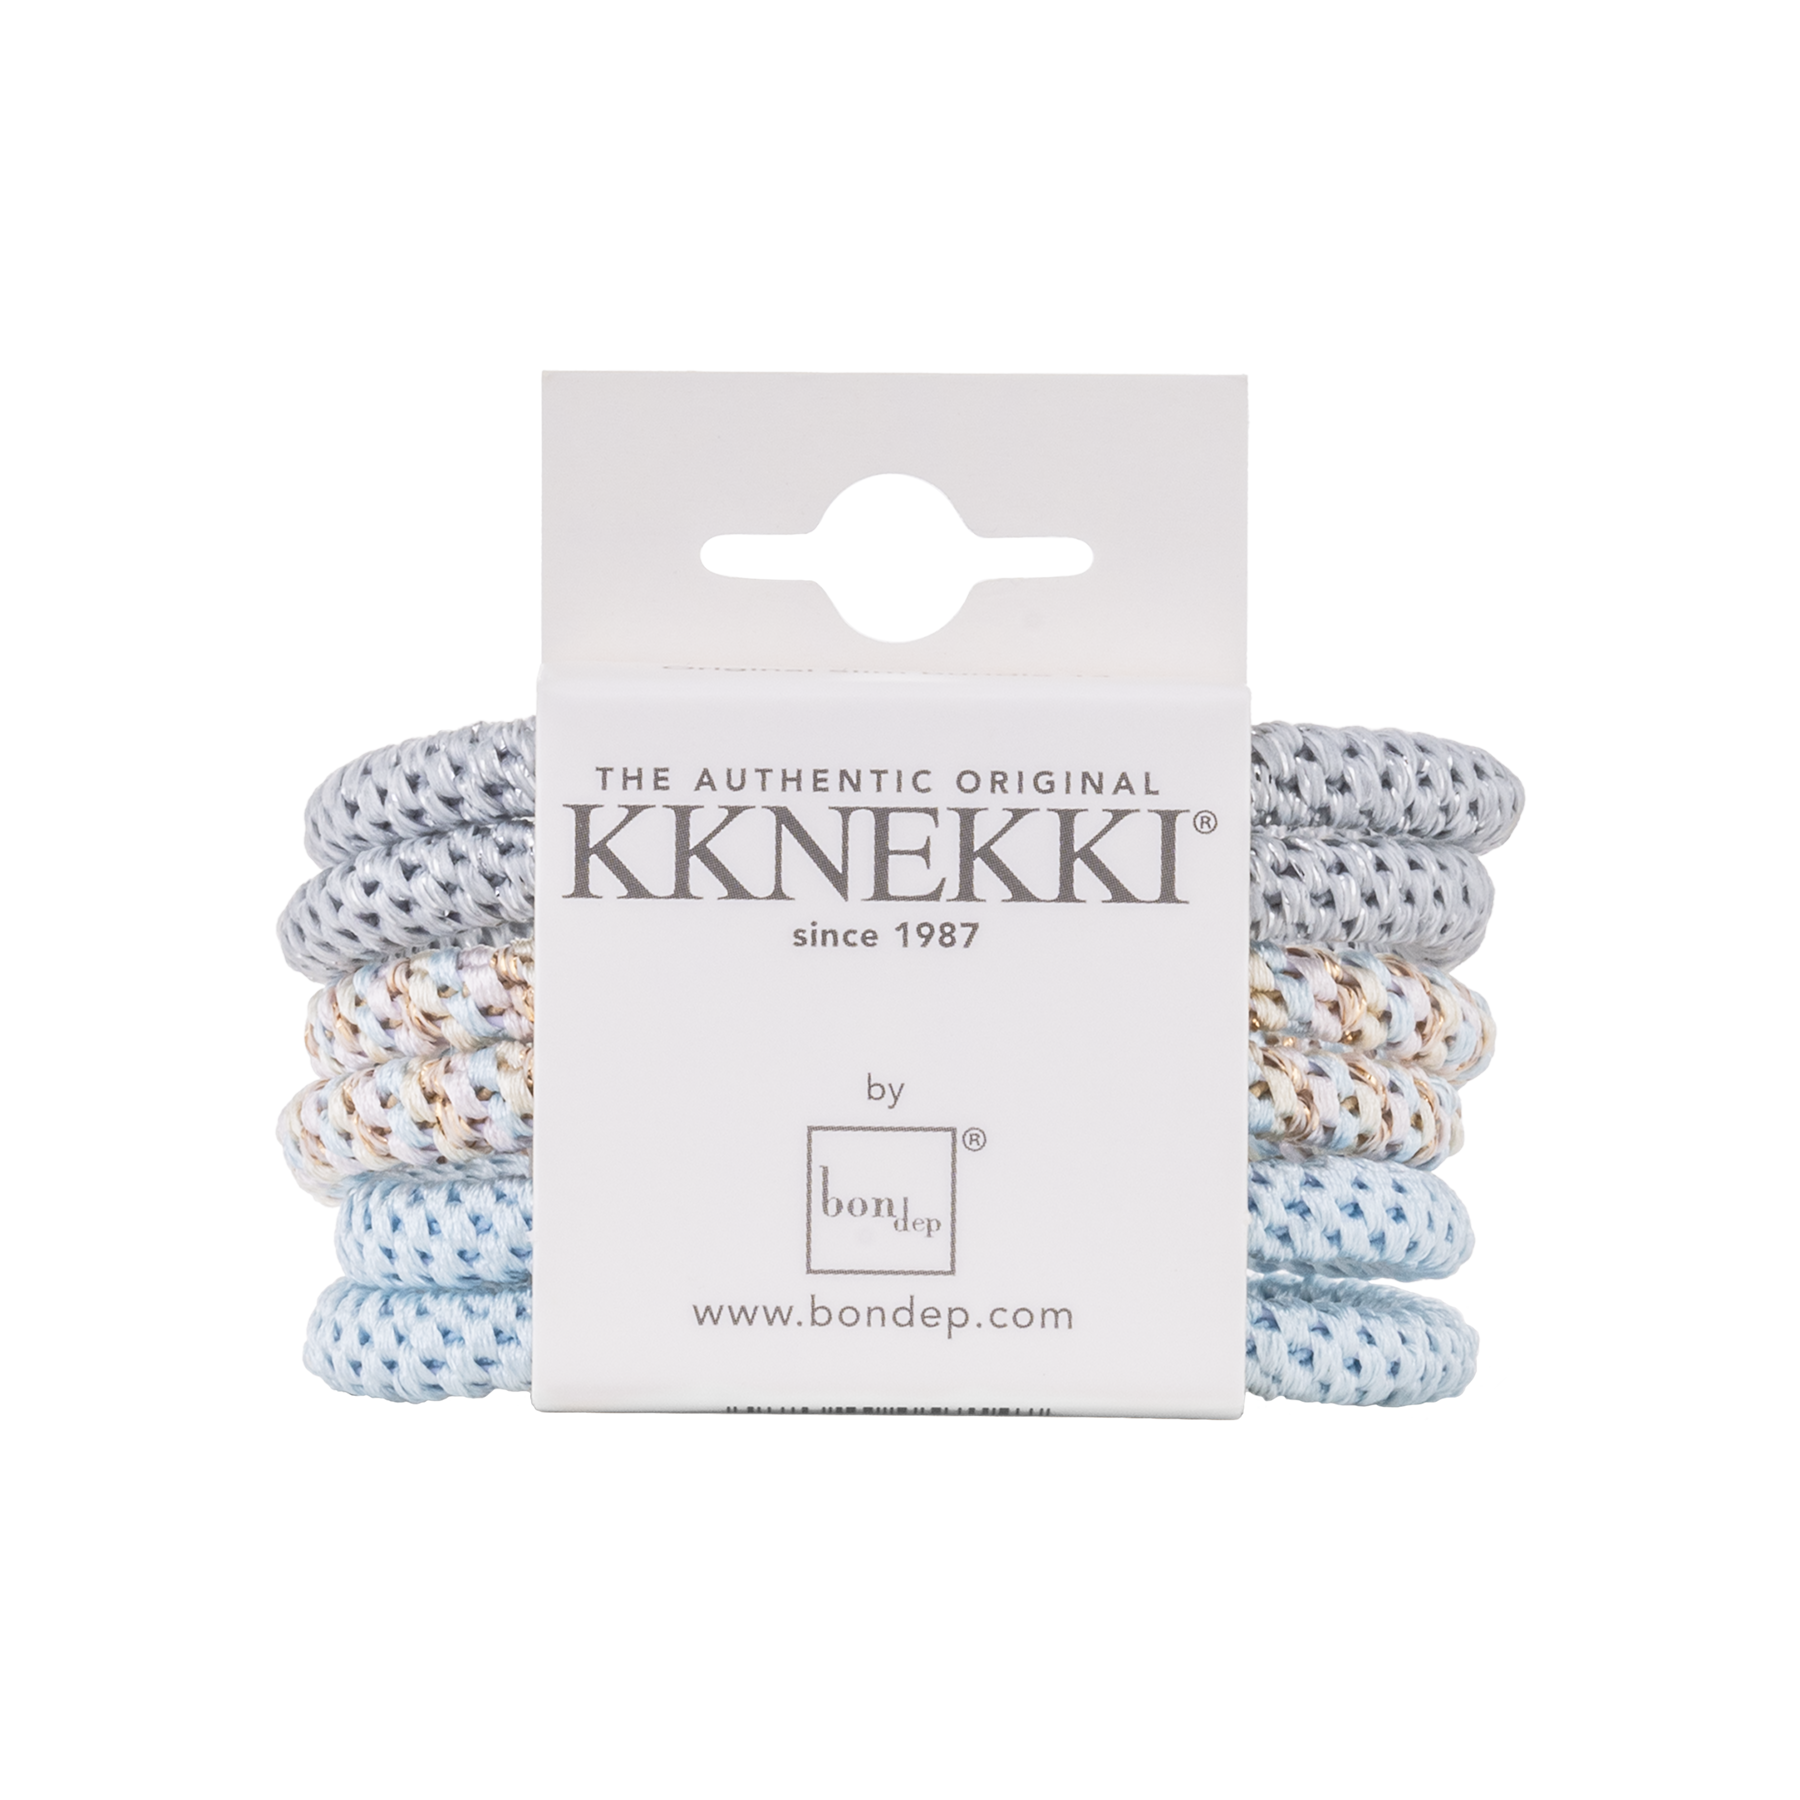 Image of Kknekki Slim Bundle 14 • 6pcs x 25  from Kknekki original hair ties